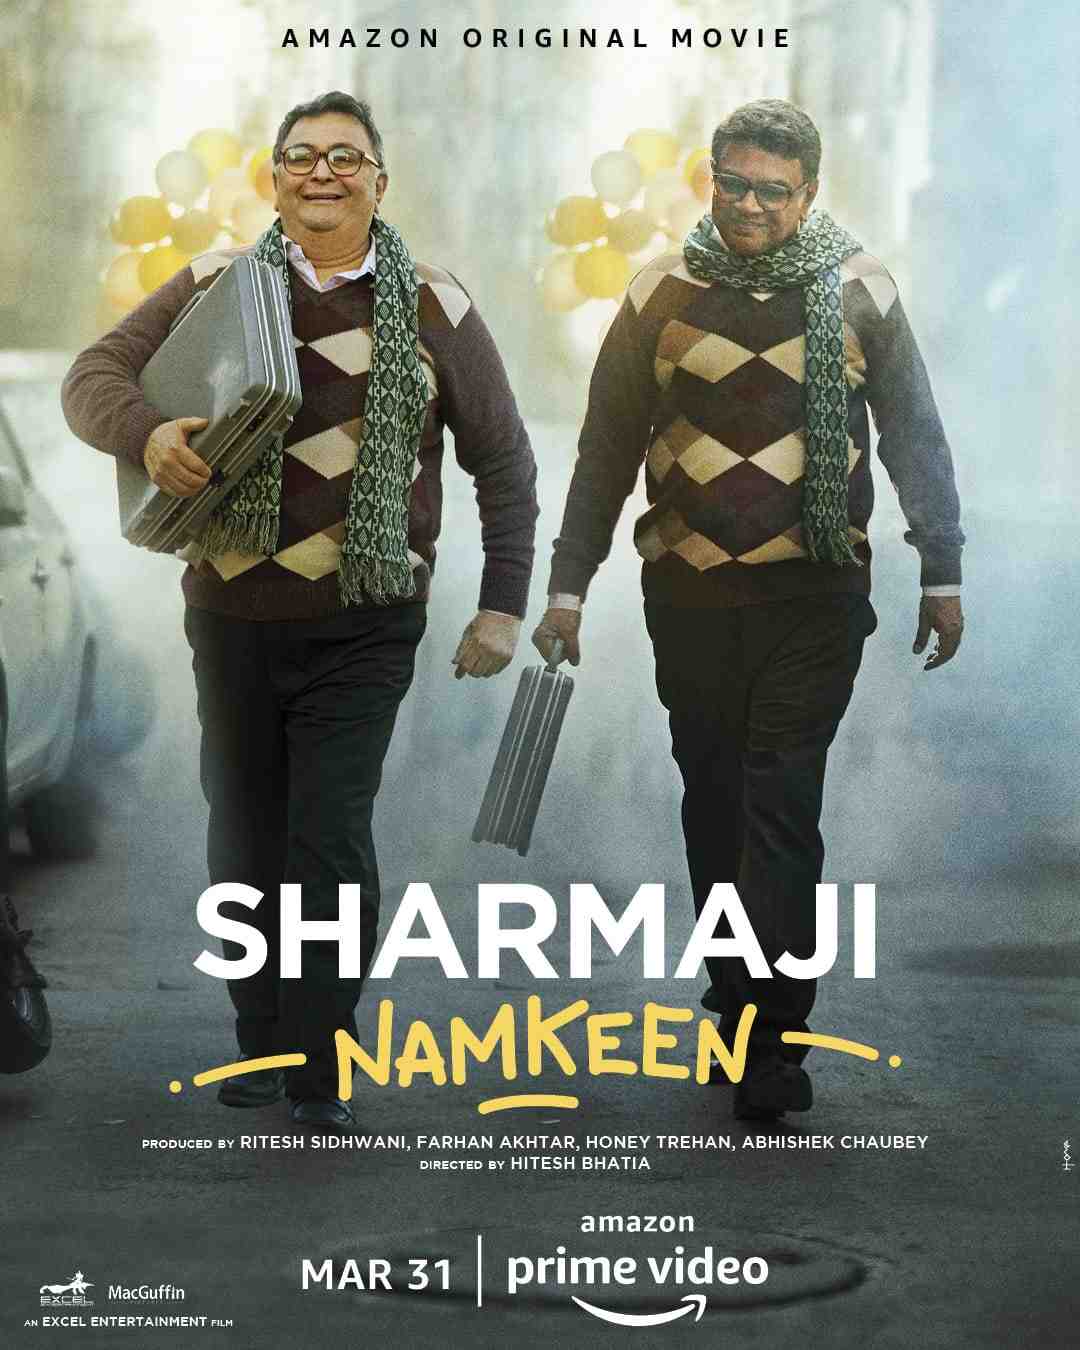 Sharmaji Namkeen Movie Review